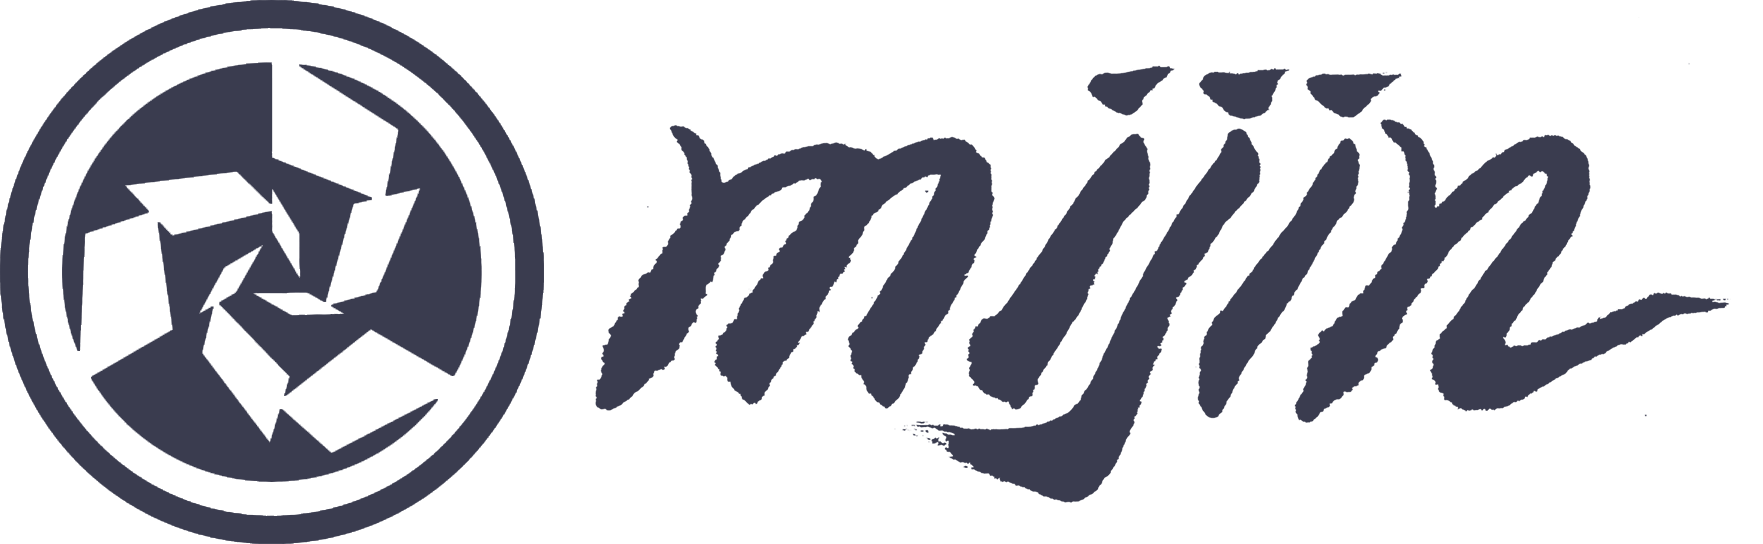 mijin-logo-with-symbol.png